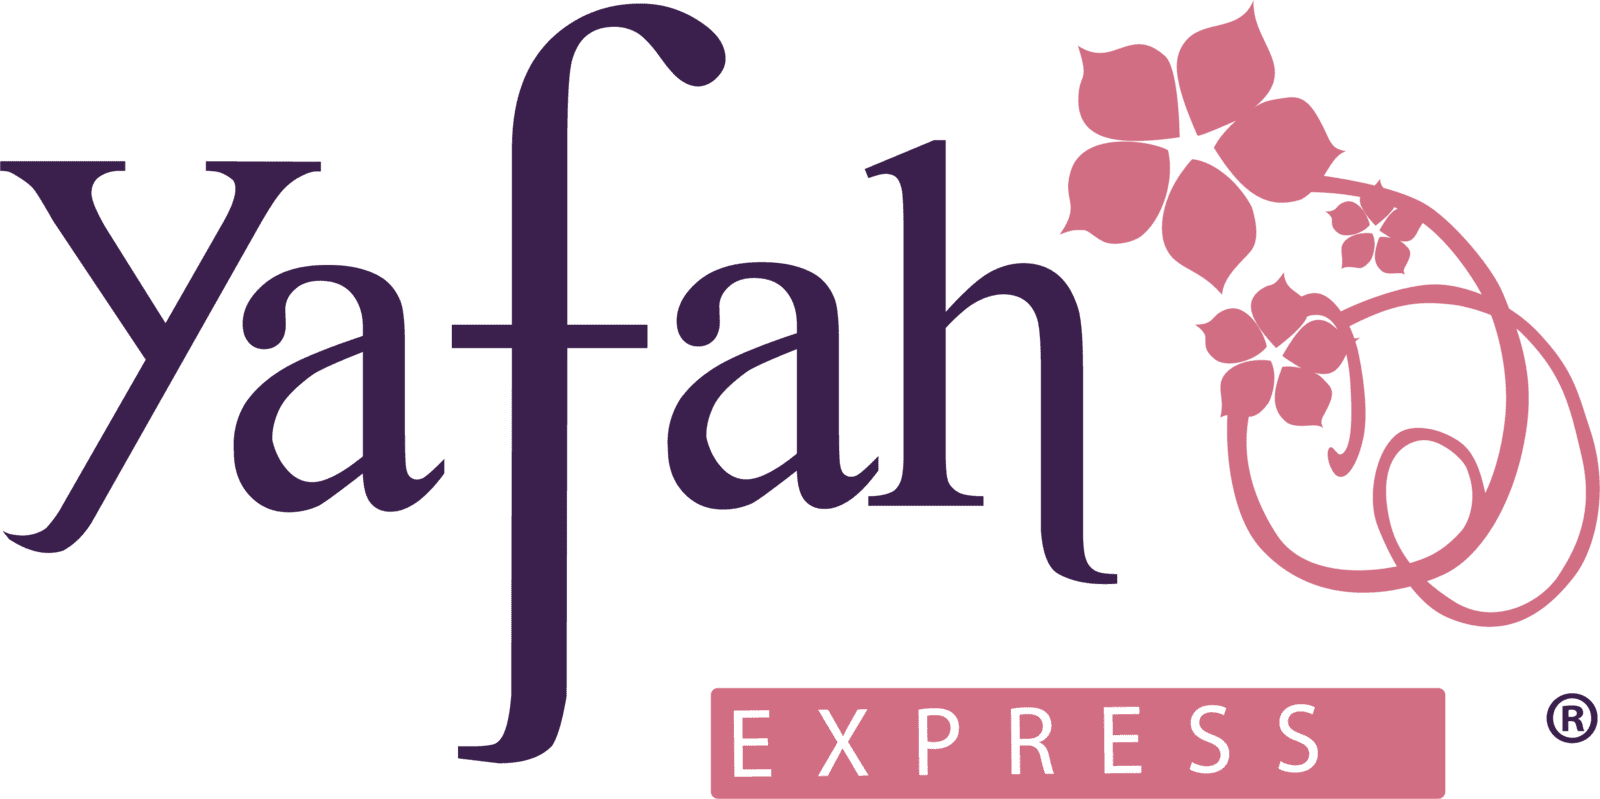 Yafah Express